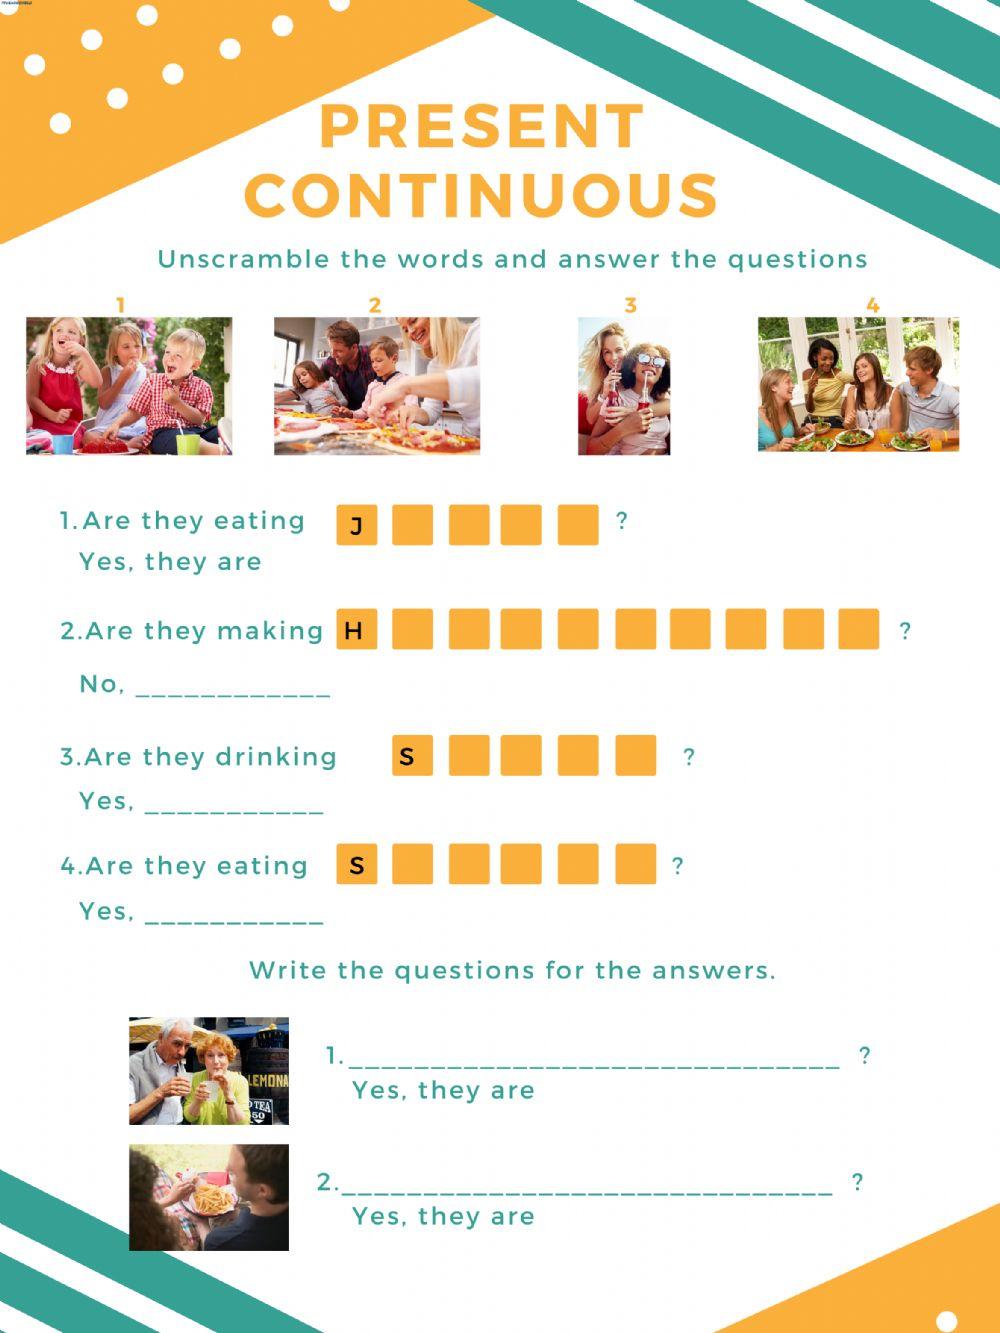 Present Continuous -Questions and sentences